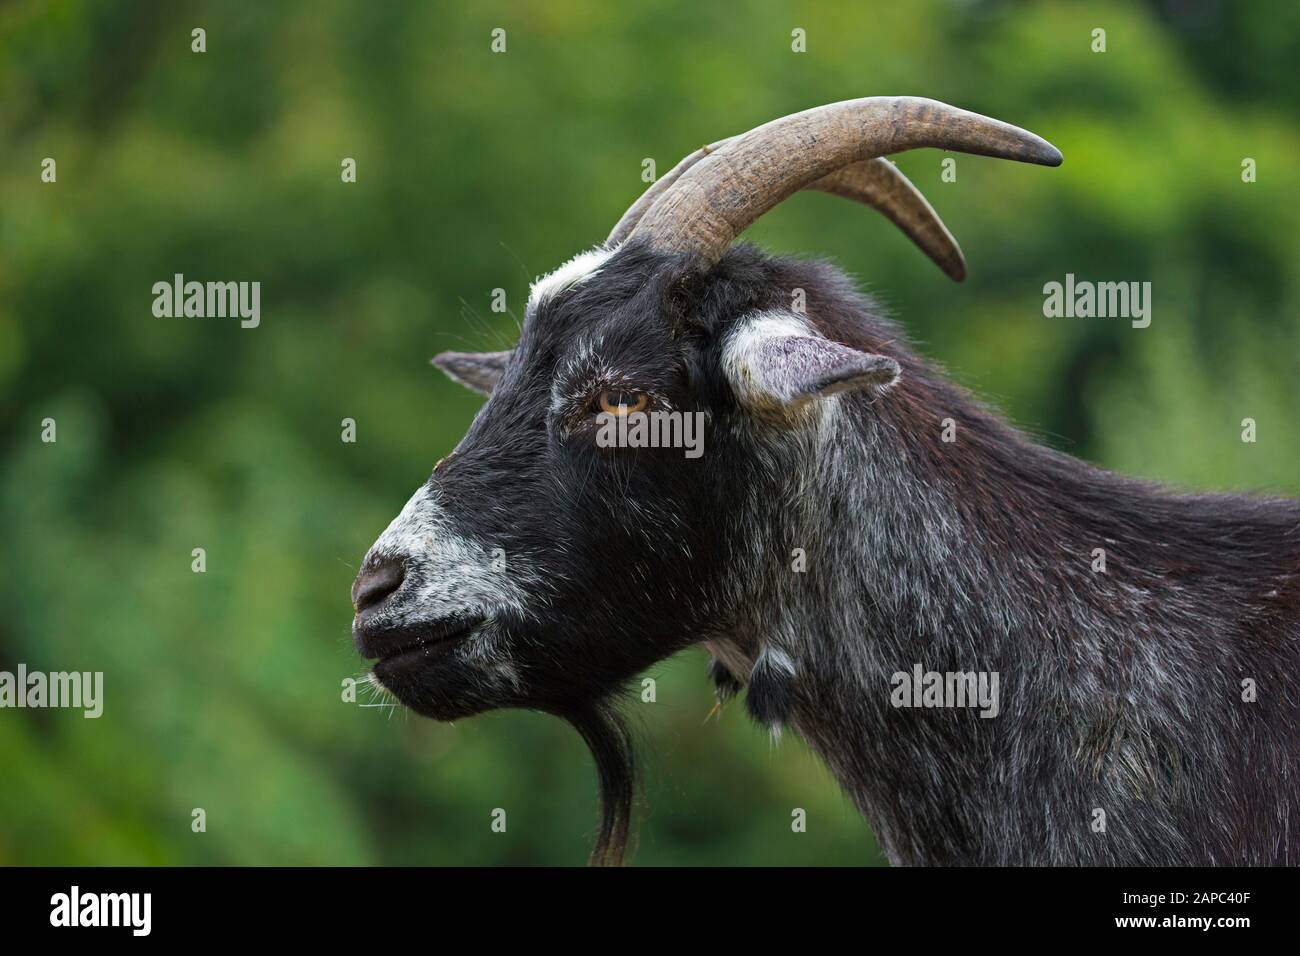 Black domestic pygmy goat (Capra aegagrus hircus) close-up portrait Stock Photo